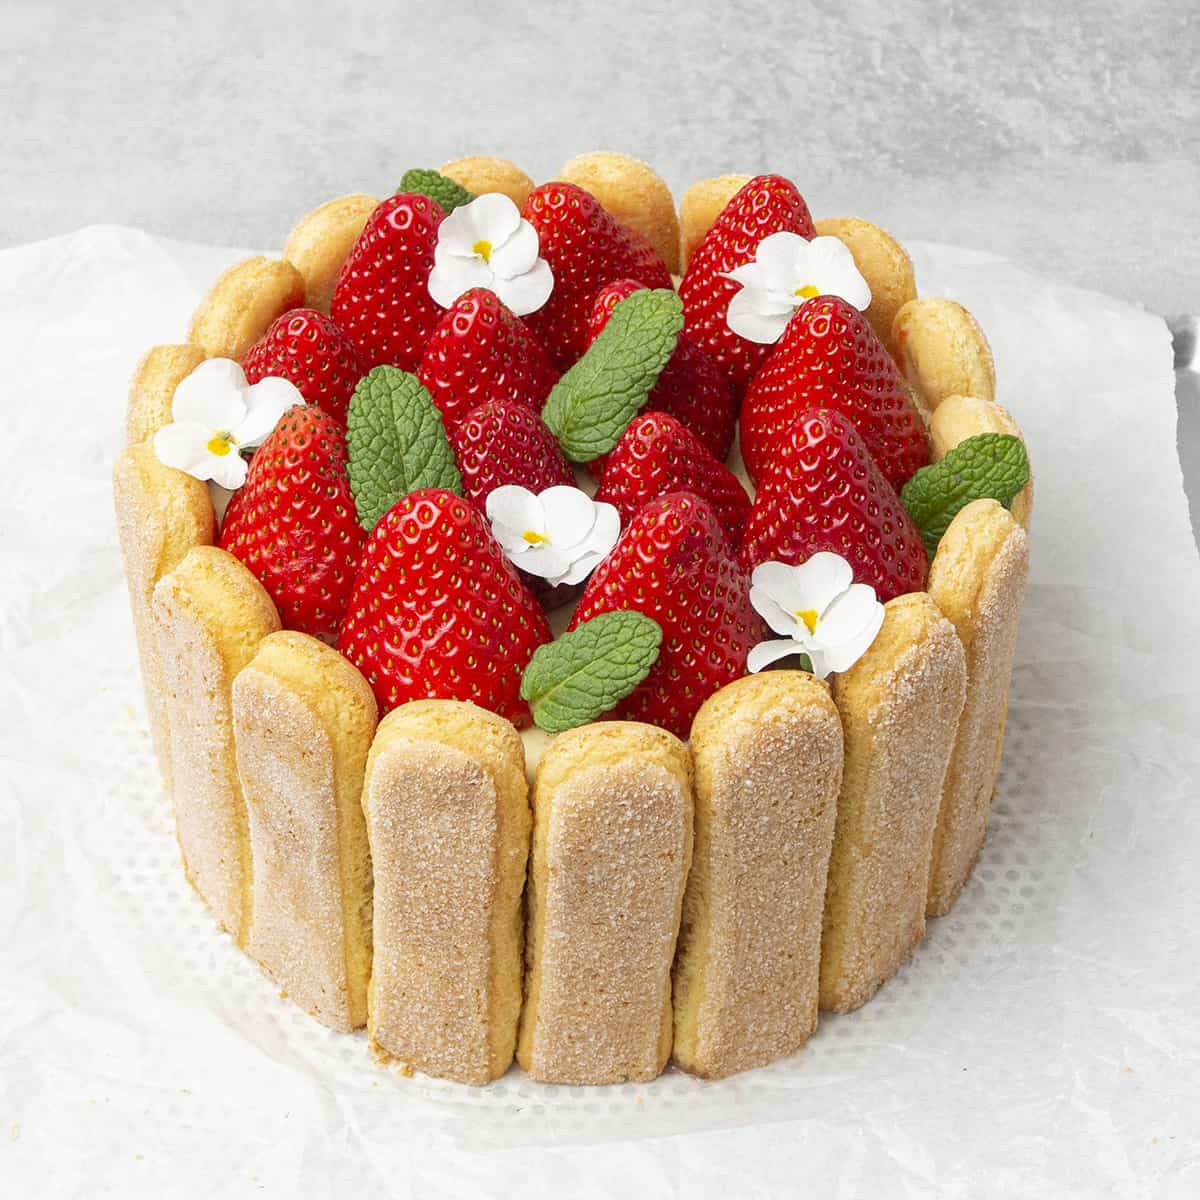 Strawberry charlotte cake.